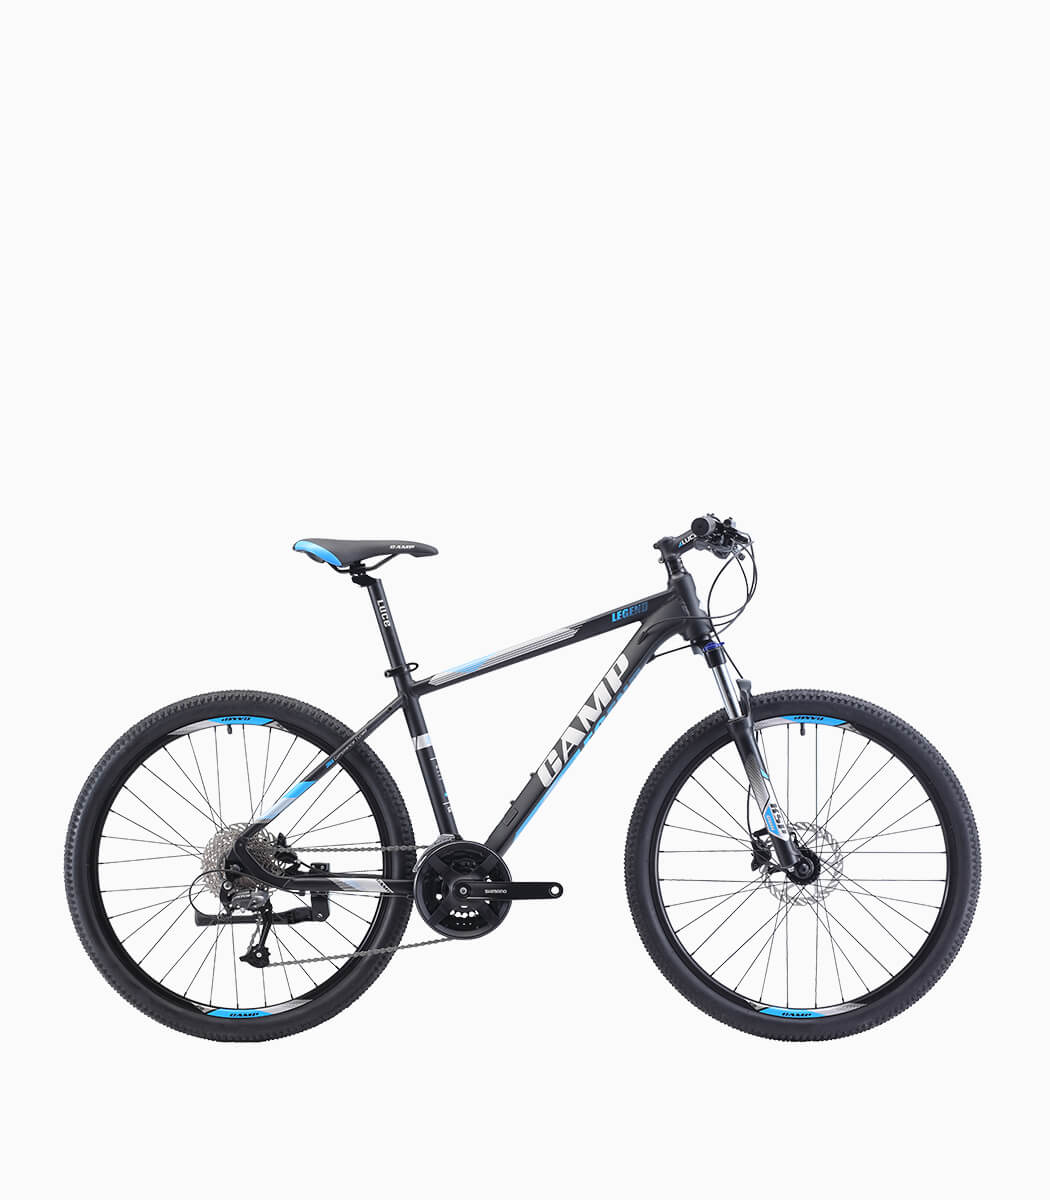 CAMP iLEAP GTX (BLACK-BLUE) mountain bike right